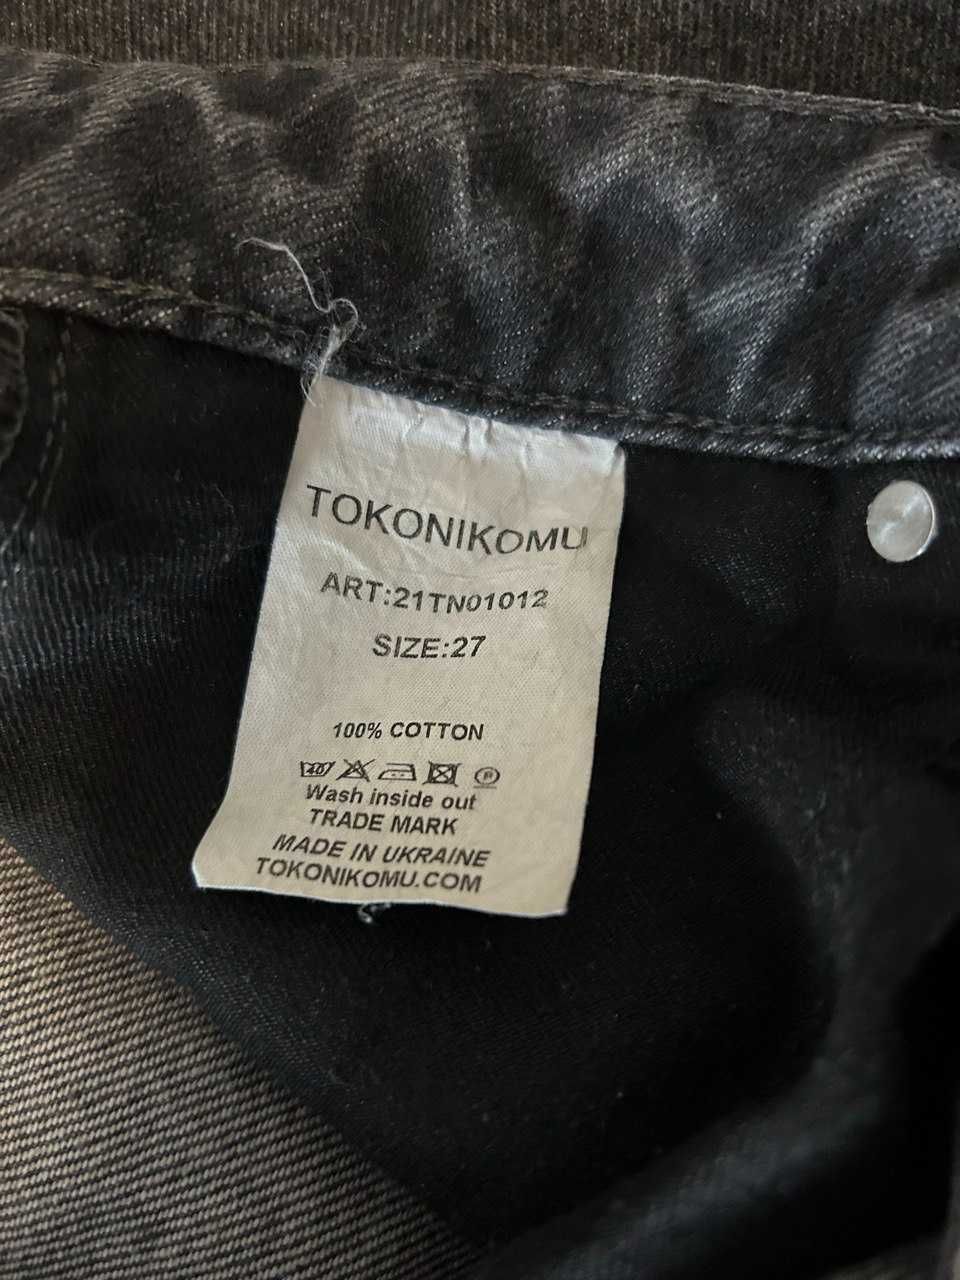 продам джинси в хорошому стані, бренд TOKONIKOMU, Україна.